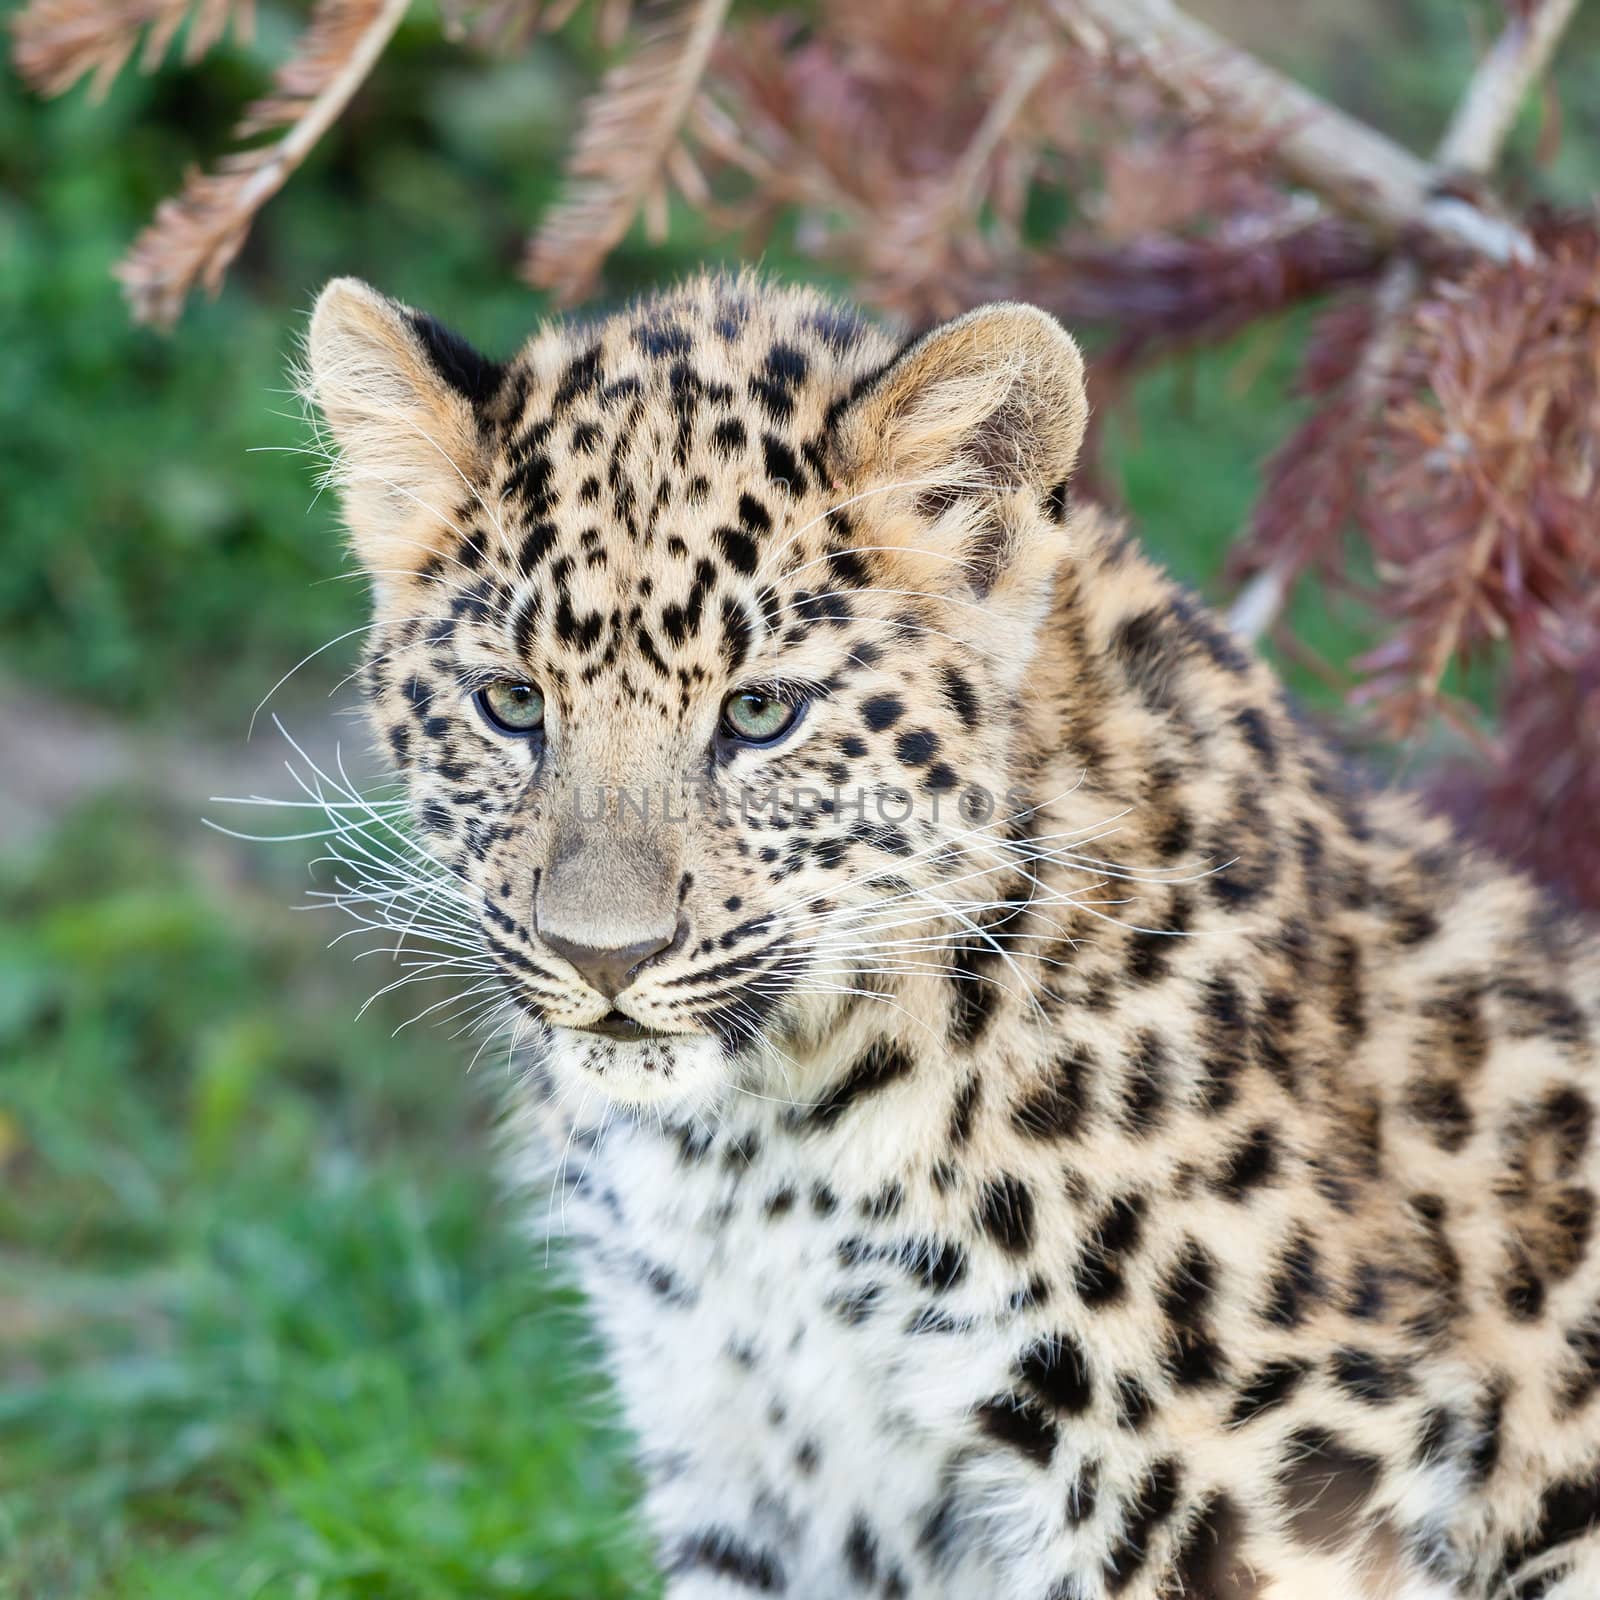 Head Shot of Adorable Baby Amur Leopard Cub by scheriton